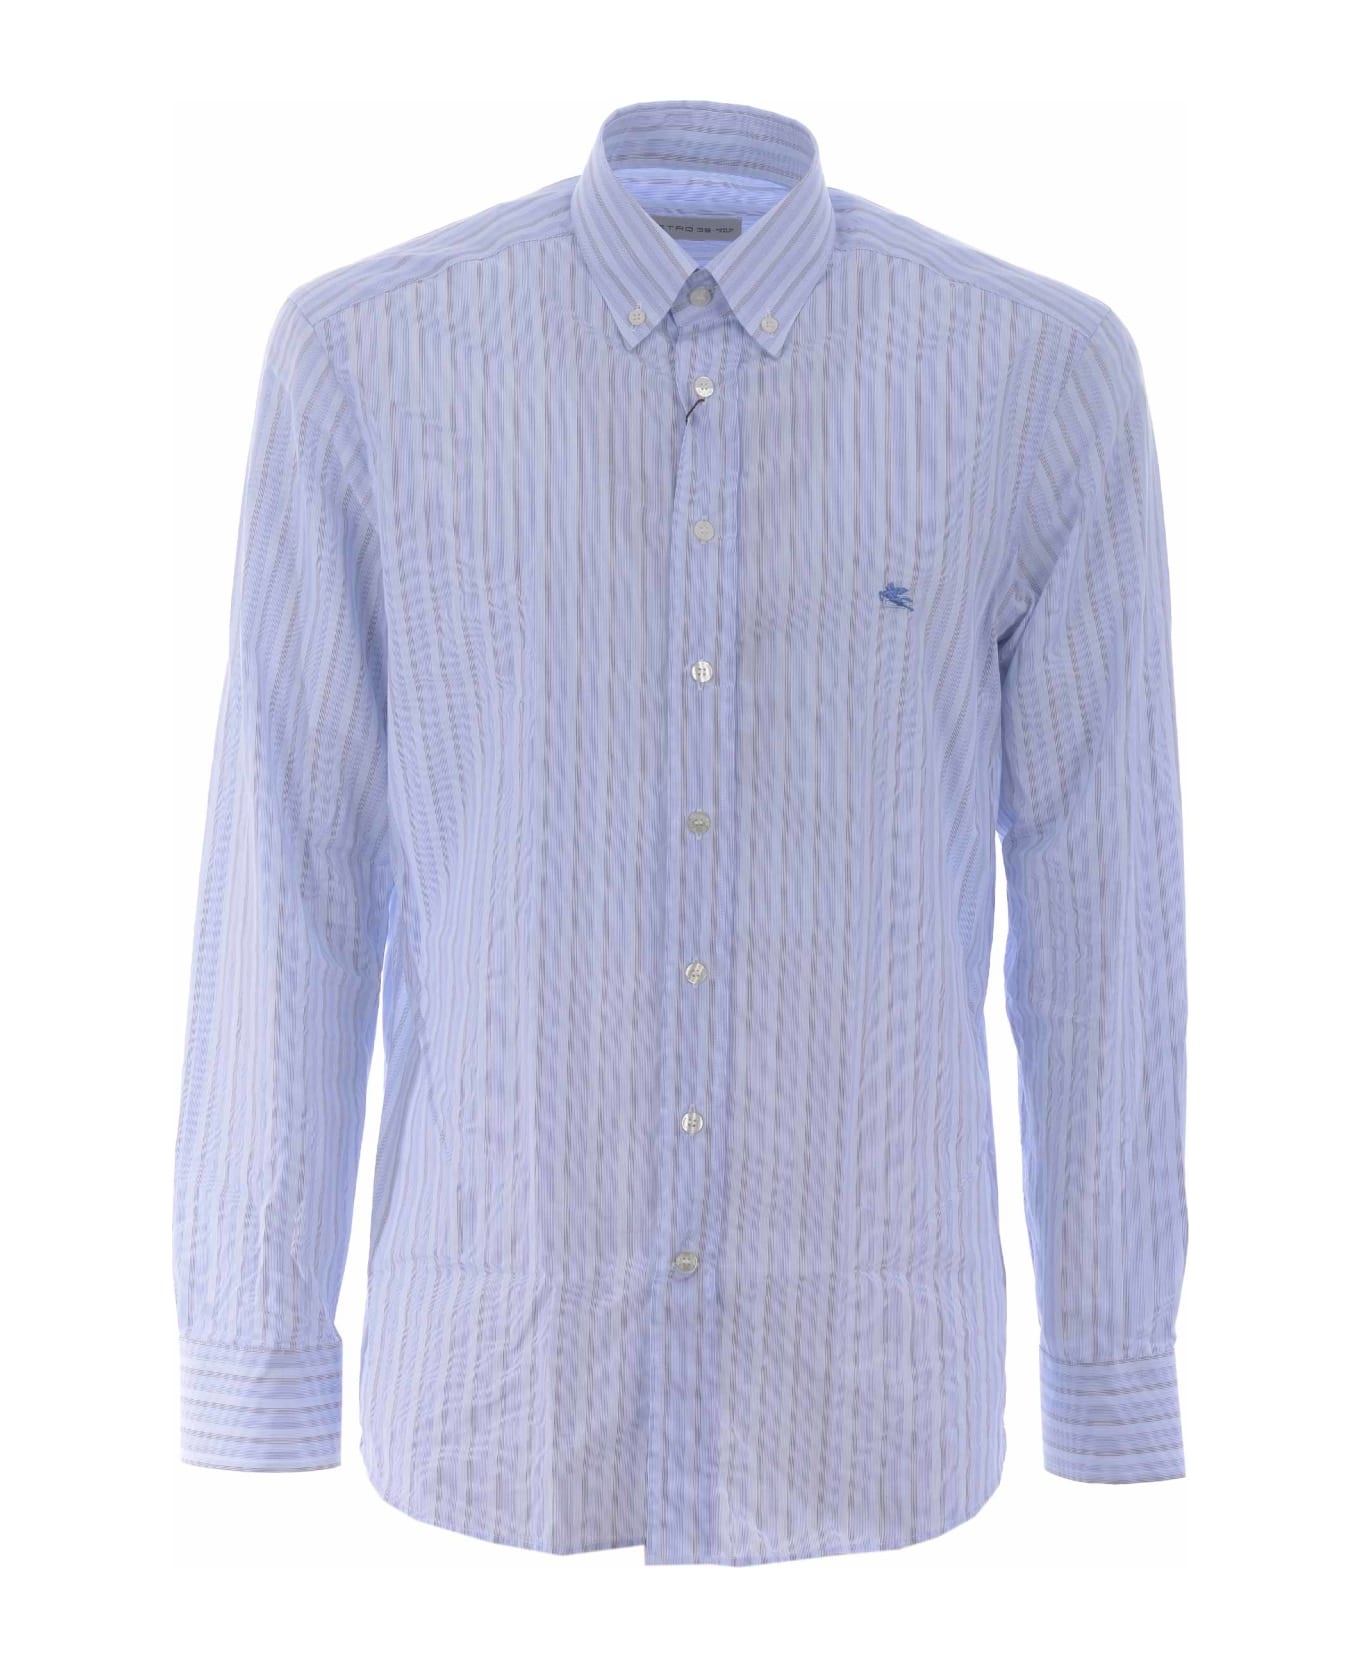 Etro Shirt "regular Button Down" In Striped Cotton - Bianco/blu